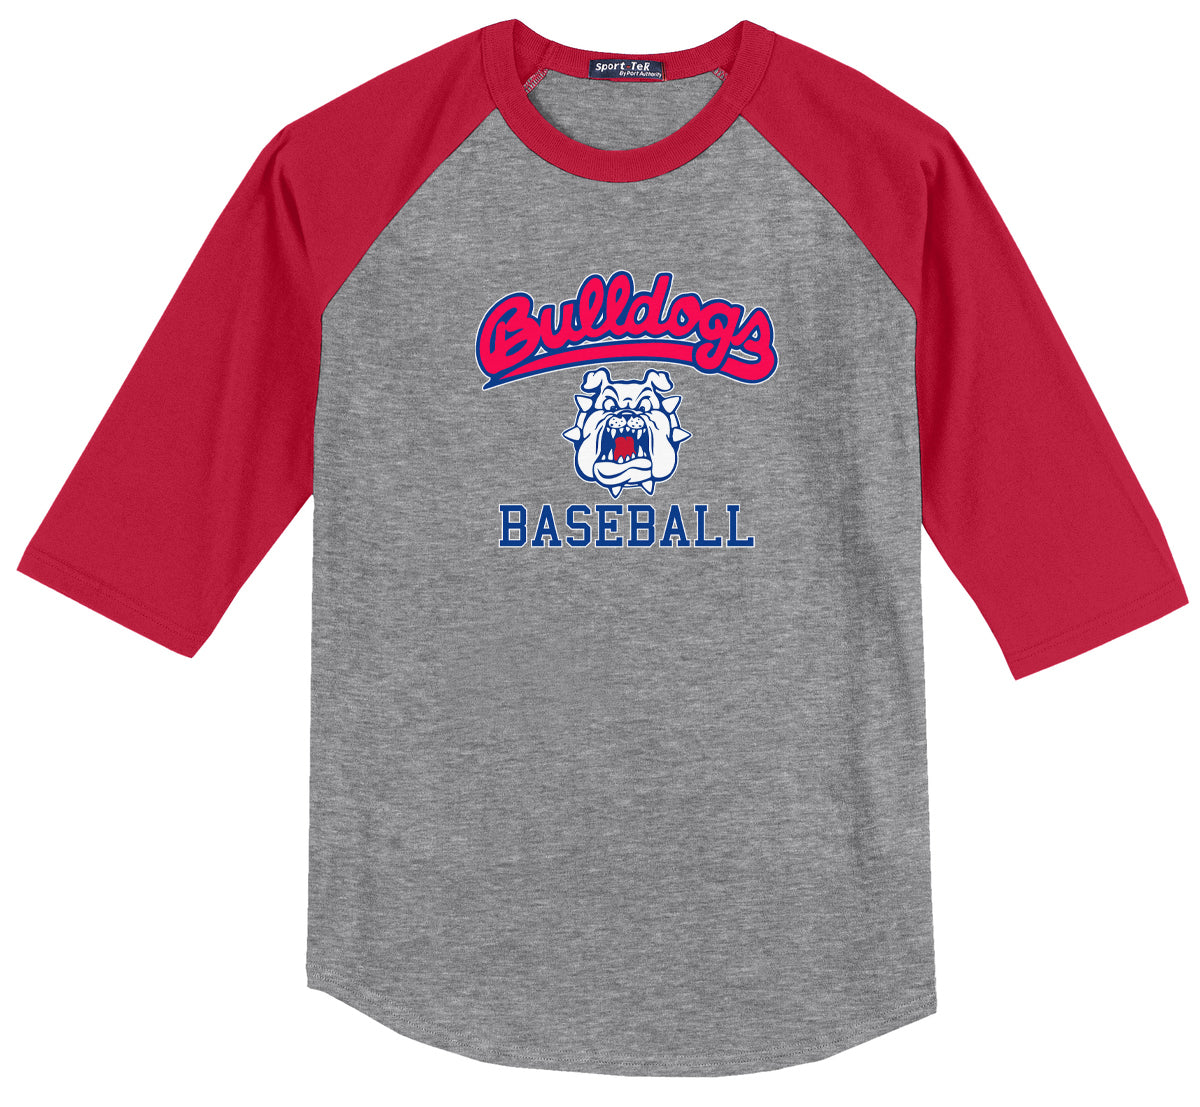 Michigan Bulldogs Baseball 3/4 Sleeve Baseball Shirt